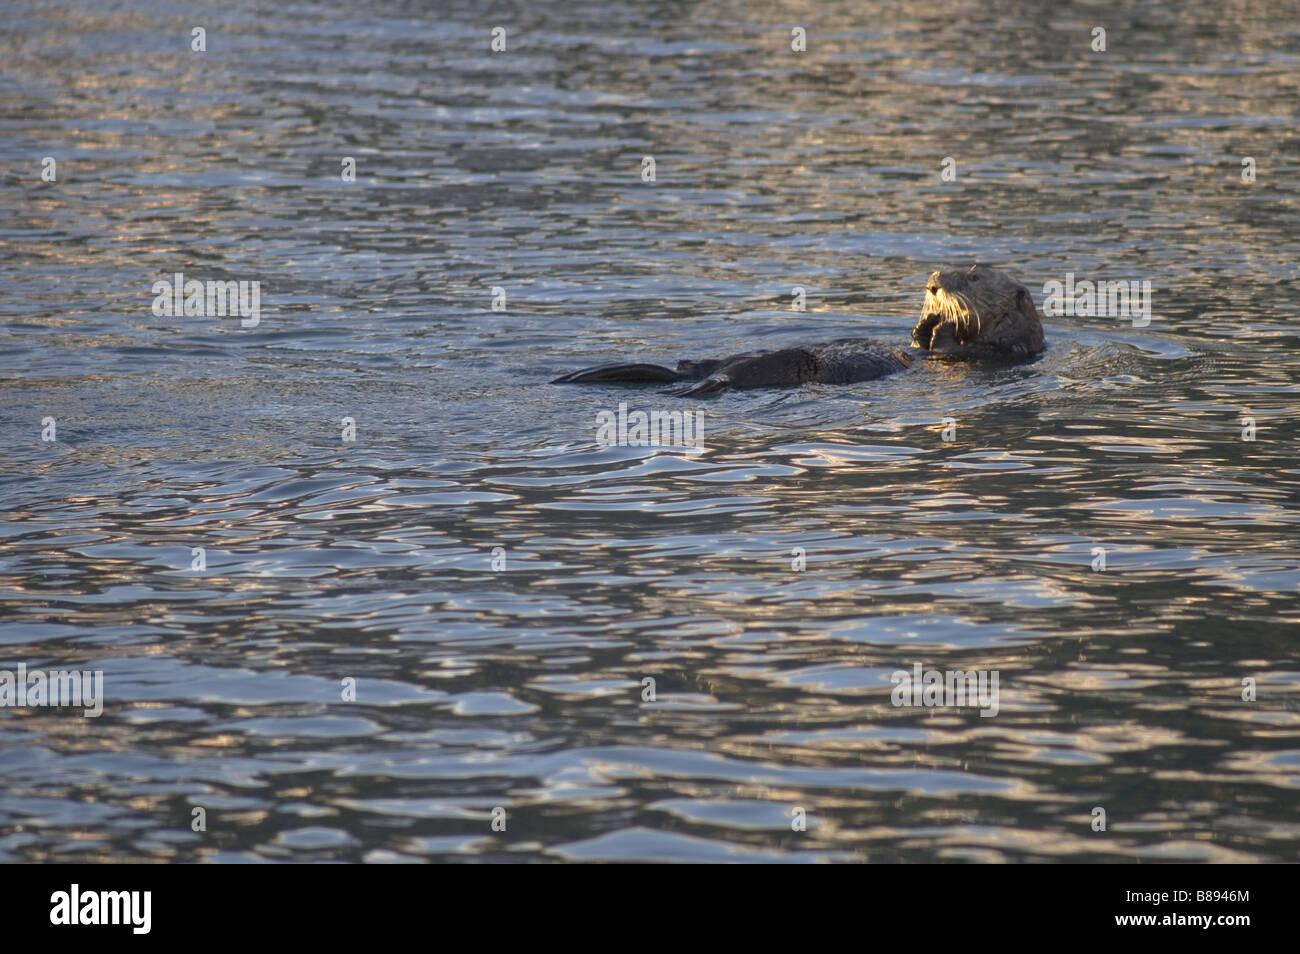 Harbor Seal Sea Otter dines on Sea Shells in Frozen Harbor Stock Photo